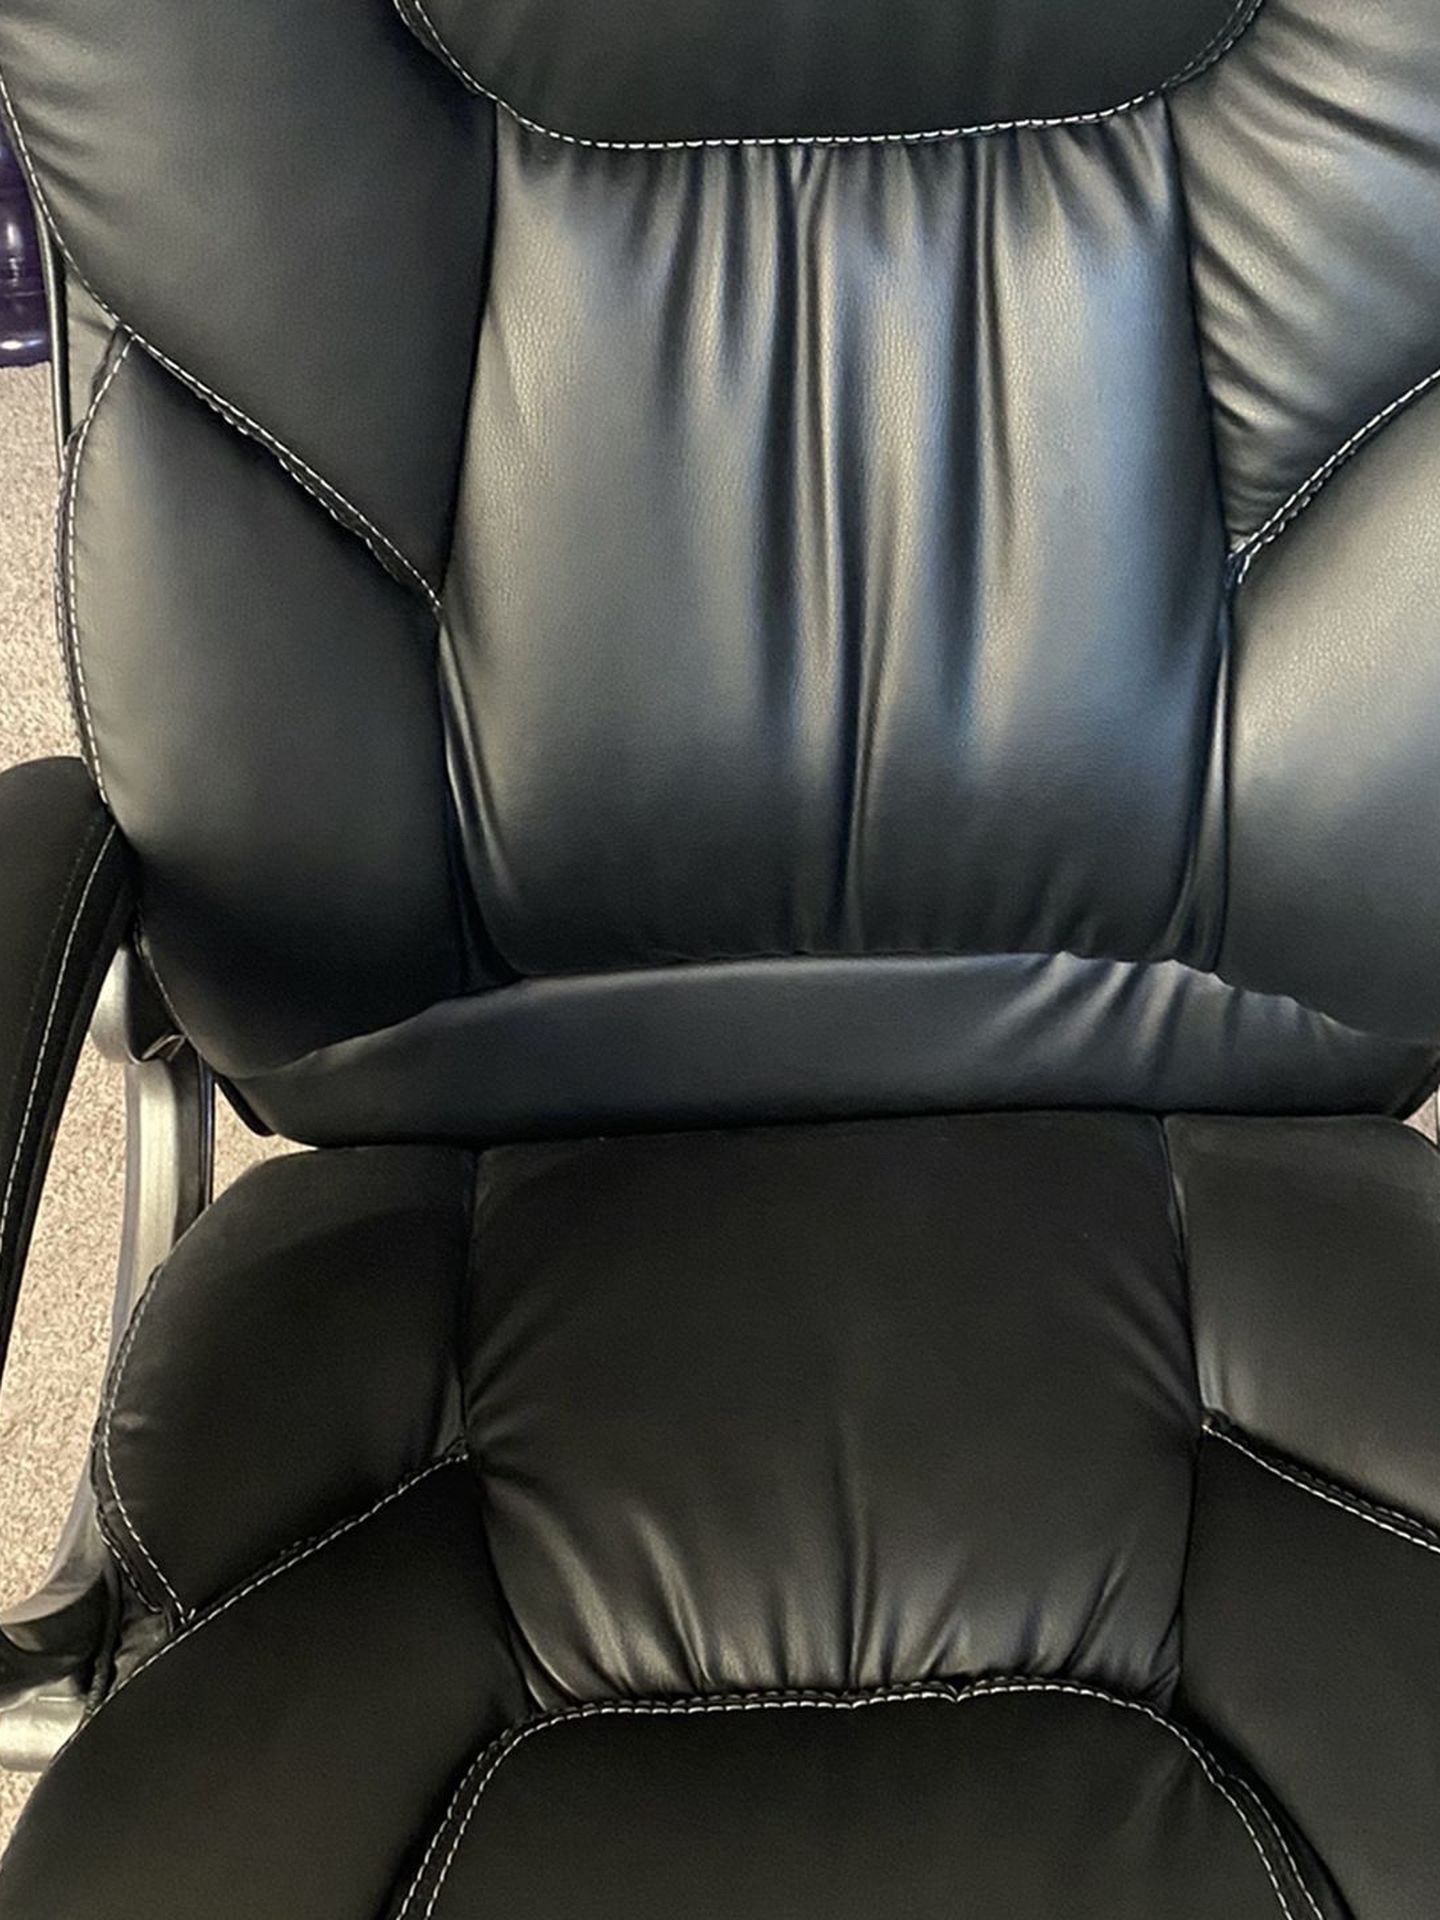 Beautiful Office Chair